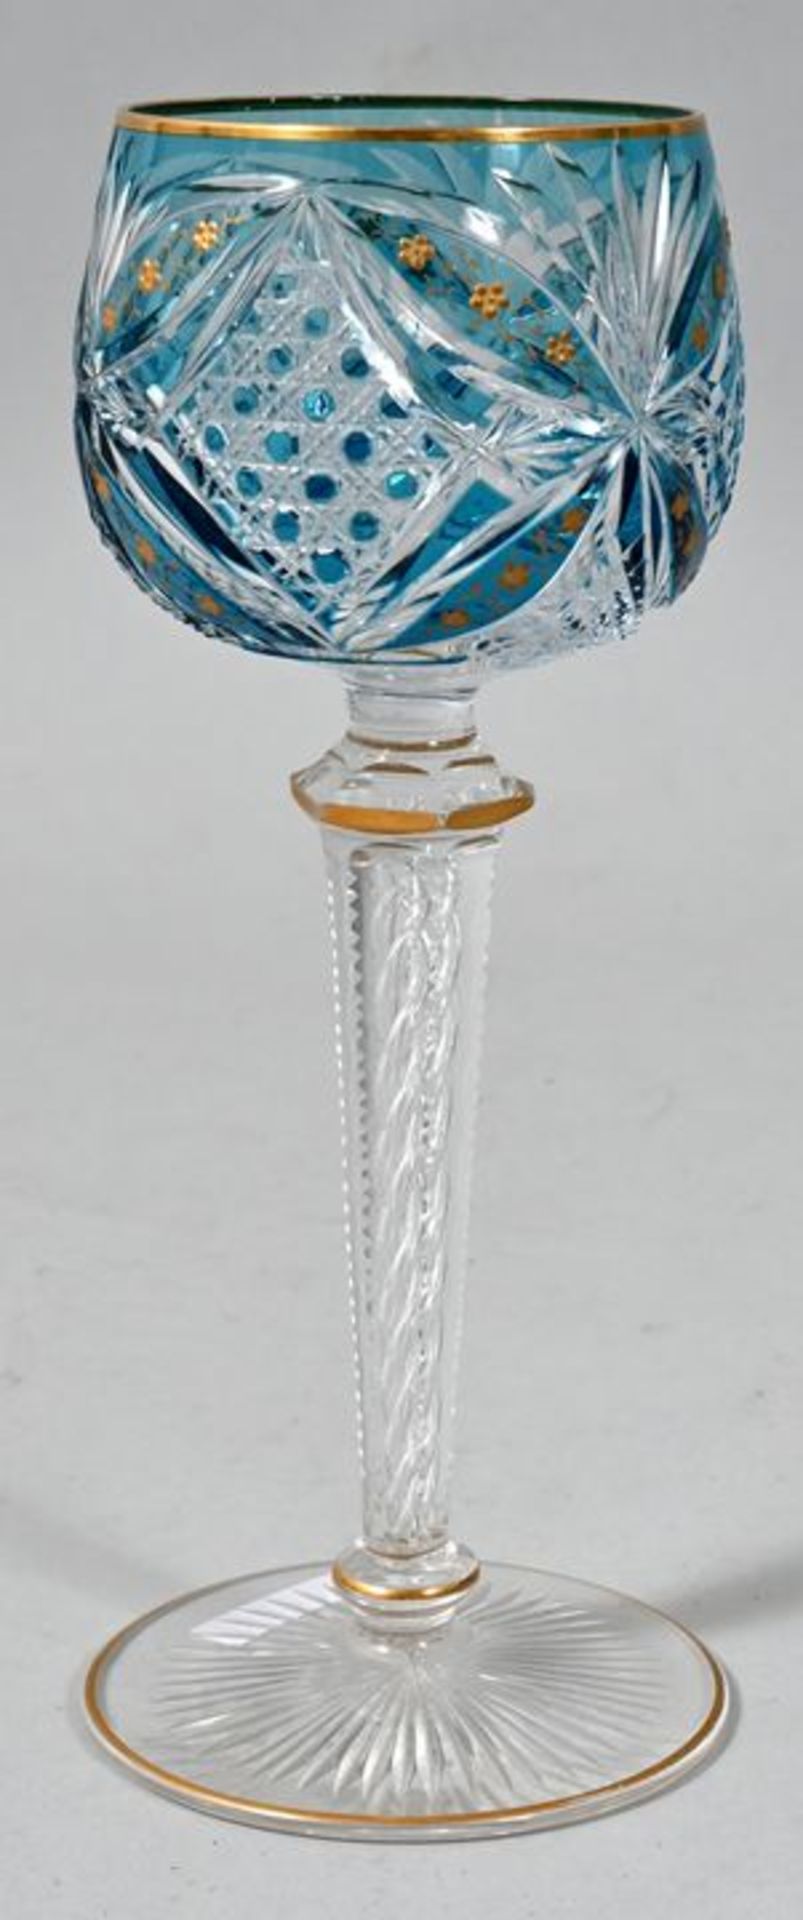 Römer, wohl Josephinenhütte, um 1920Farbloses Kristallglas mit hellblauem transparentem Üb